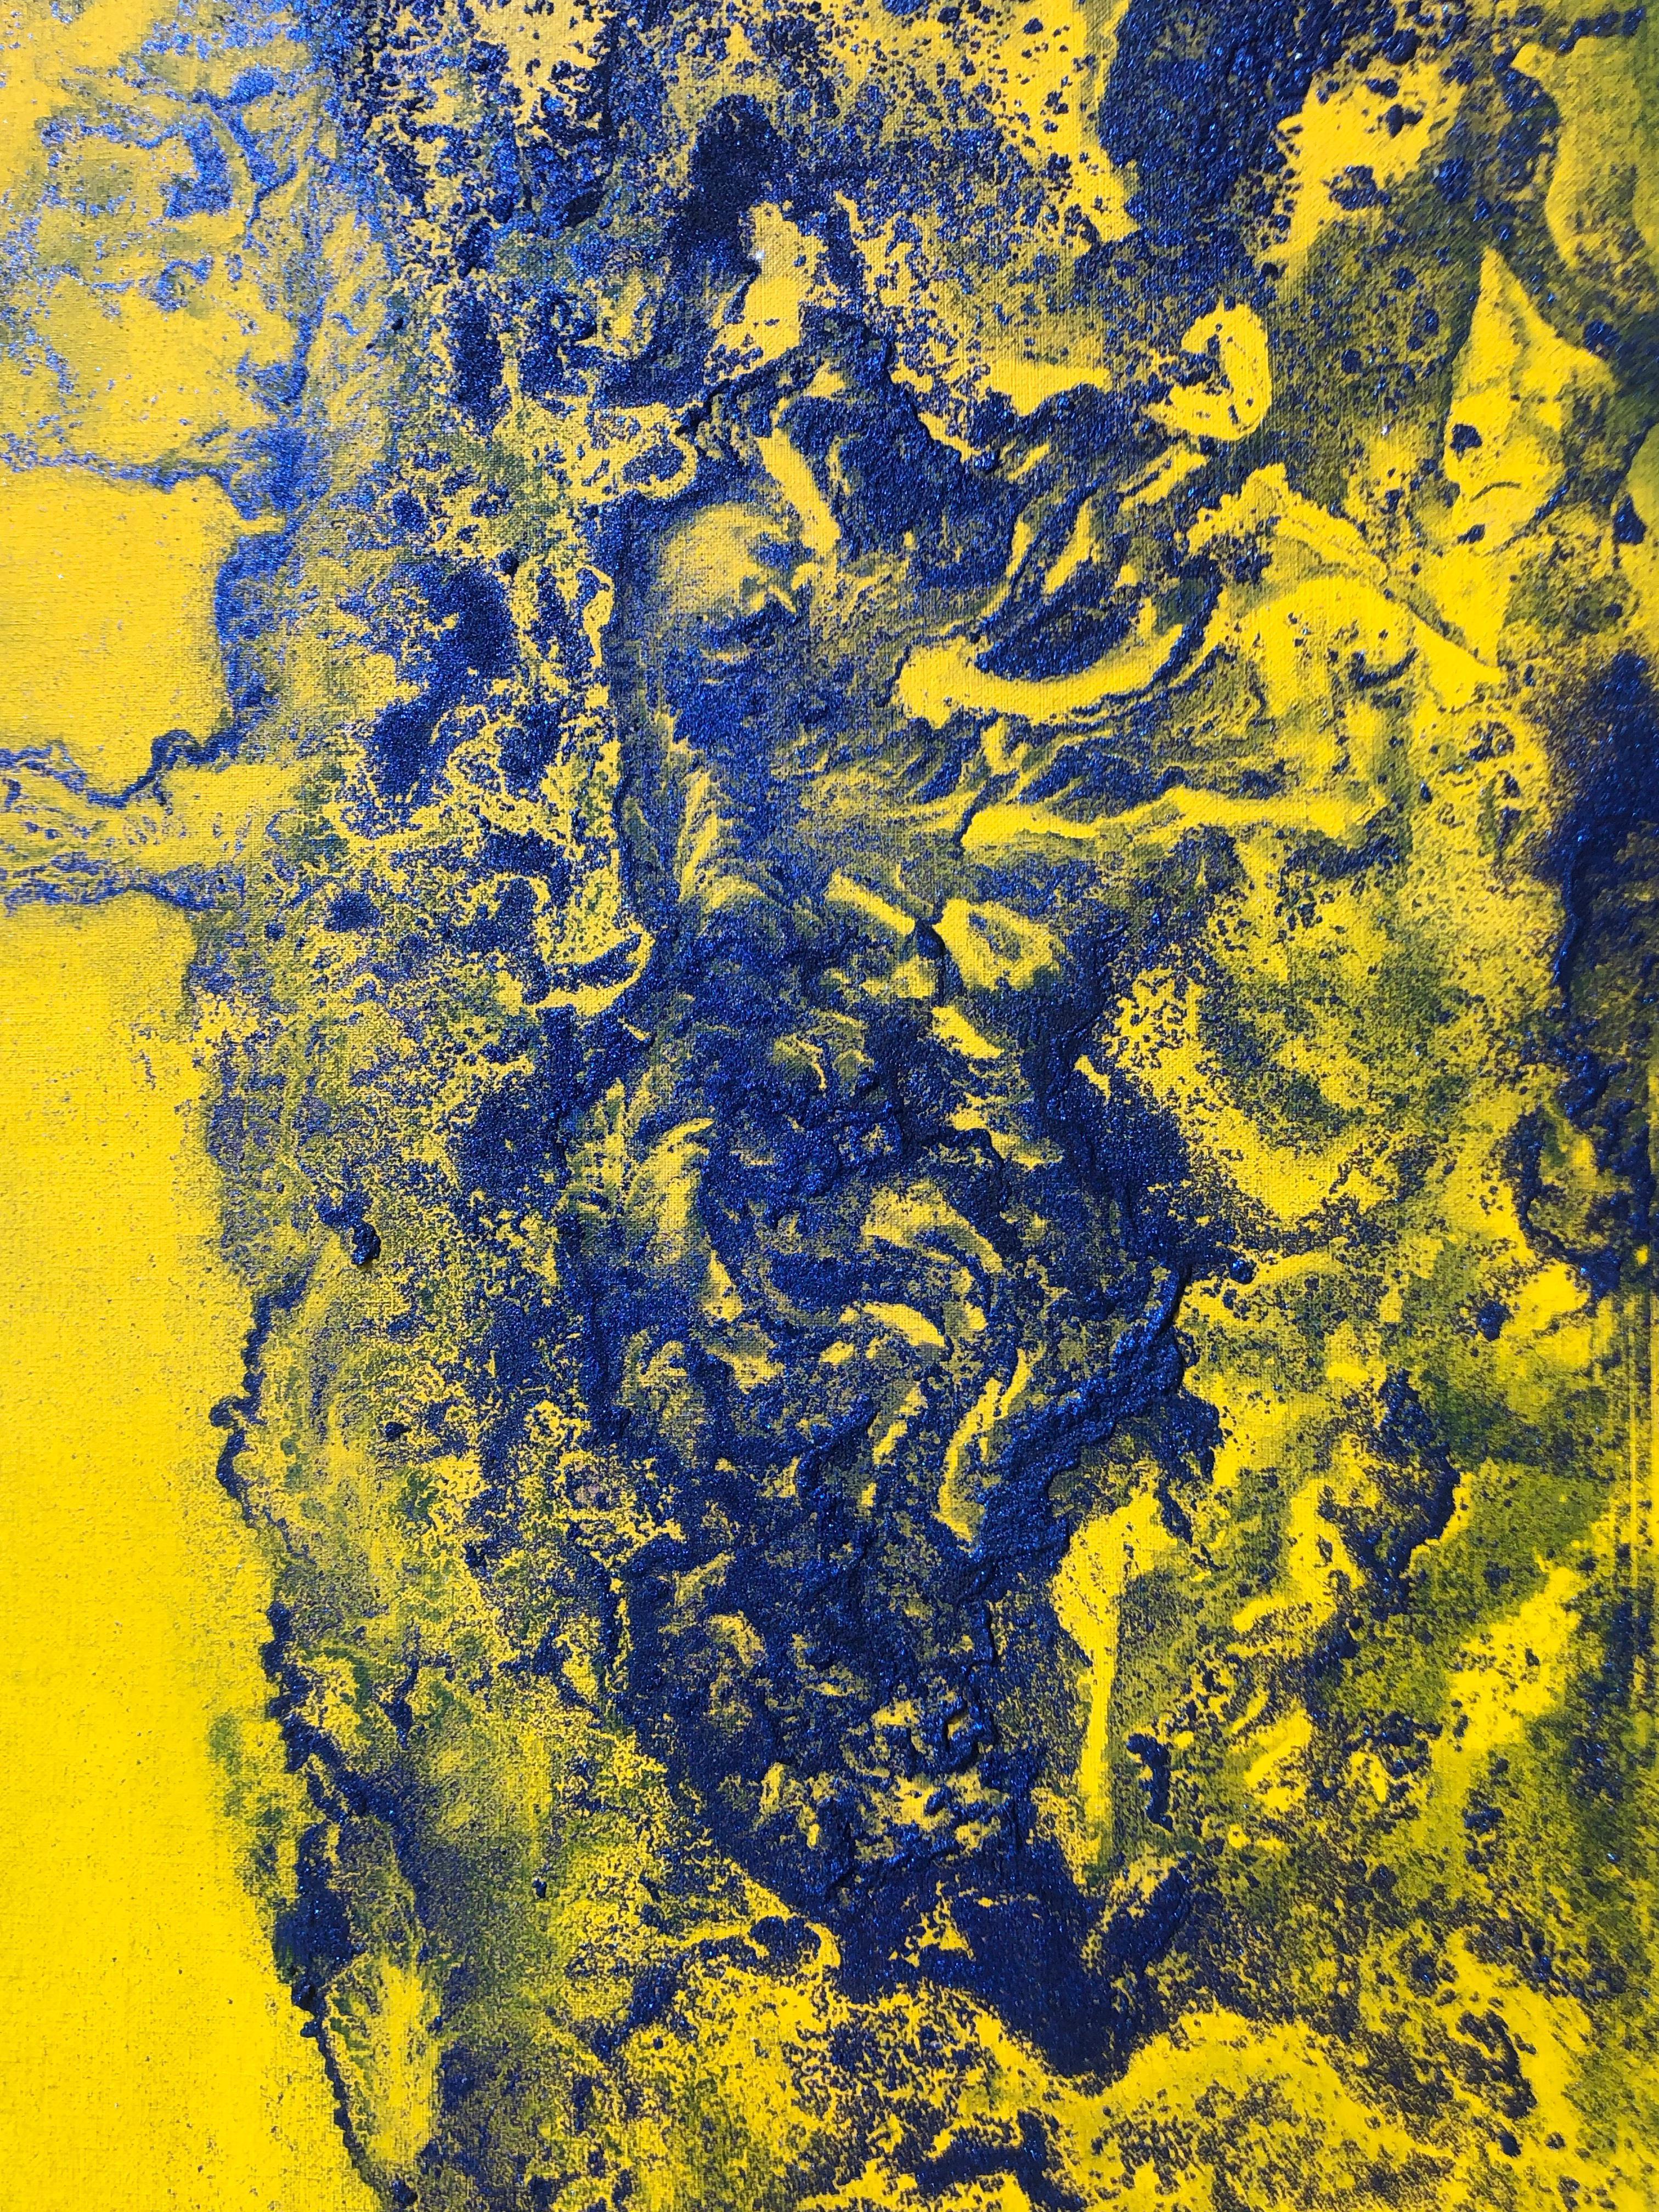 Contemporary art - 21st century painting on linen canvas - Blue, yellow, waves (Abstrakt), Painting, von Volodymyr Zayichenko